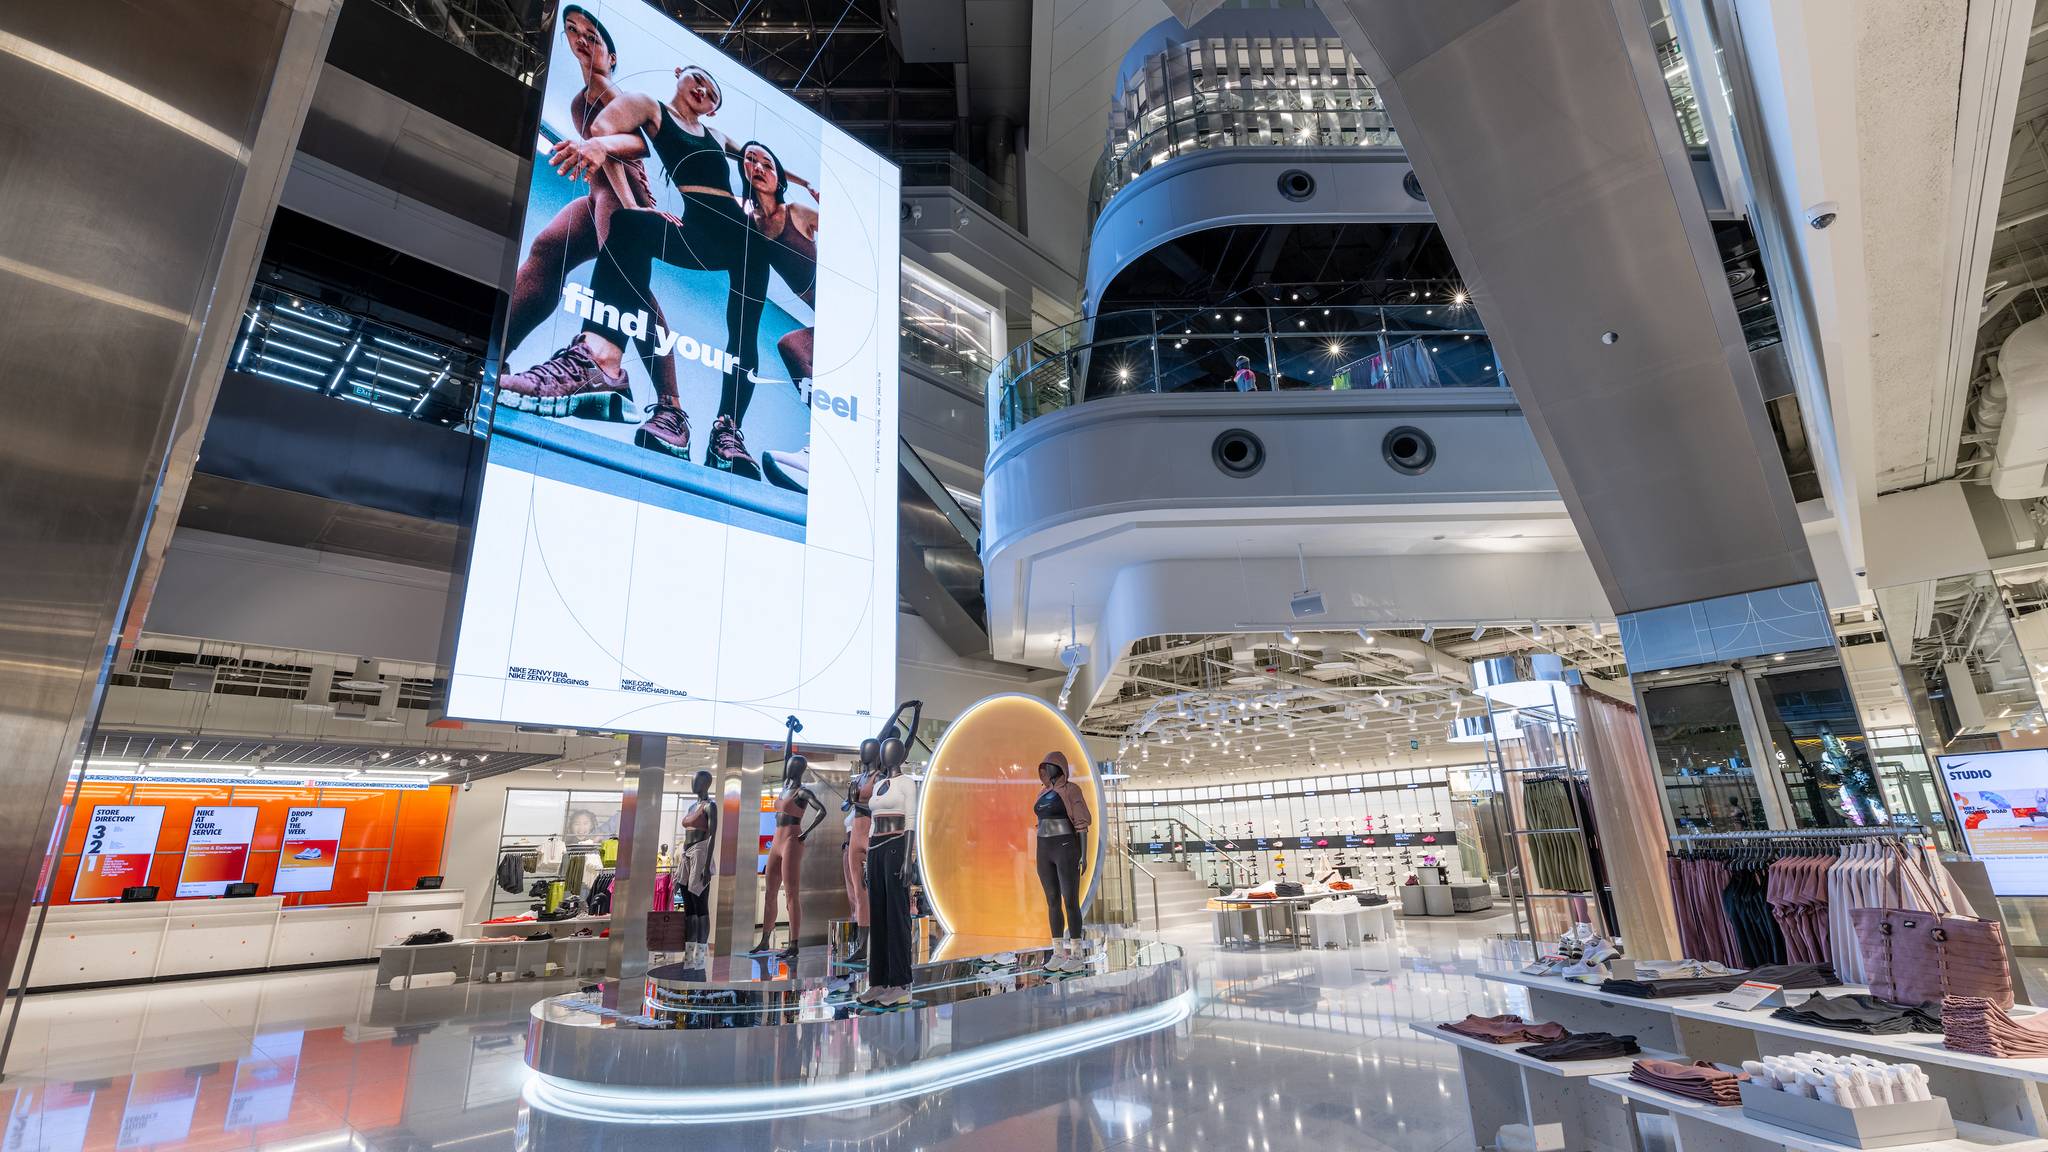 Nike’s sports hub elevates local retail in Singapore